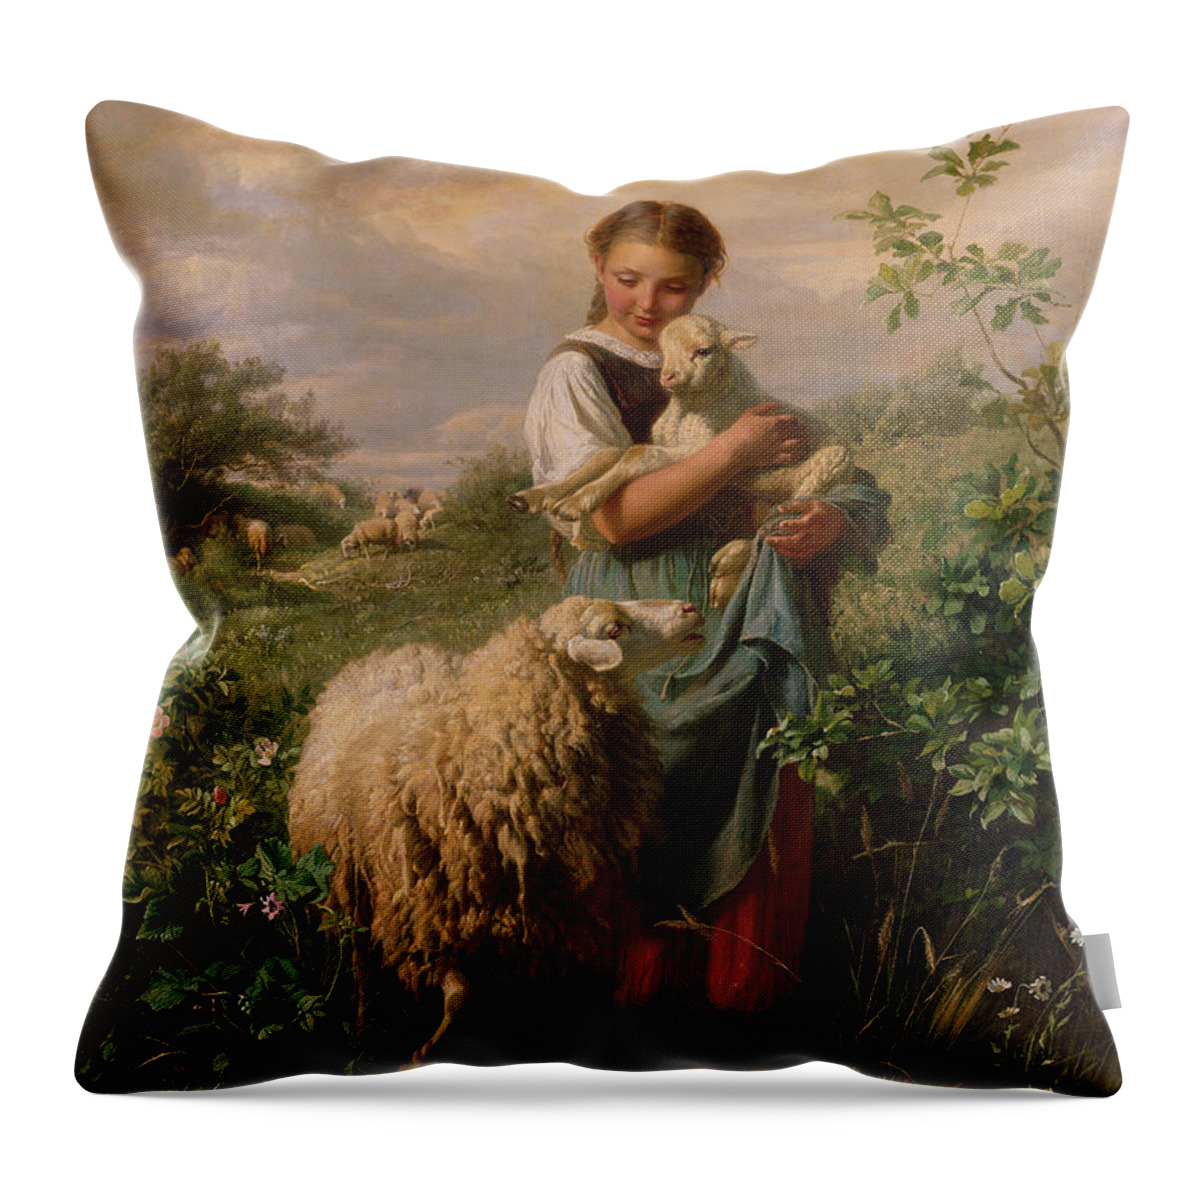 #faatoppicks Throw Pillow featuring the painting The Shepherdess by Johann Baptist Hofner